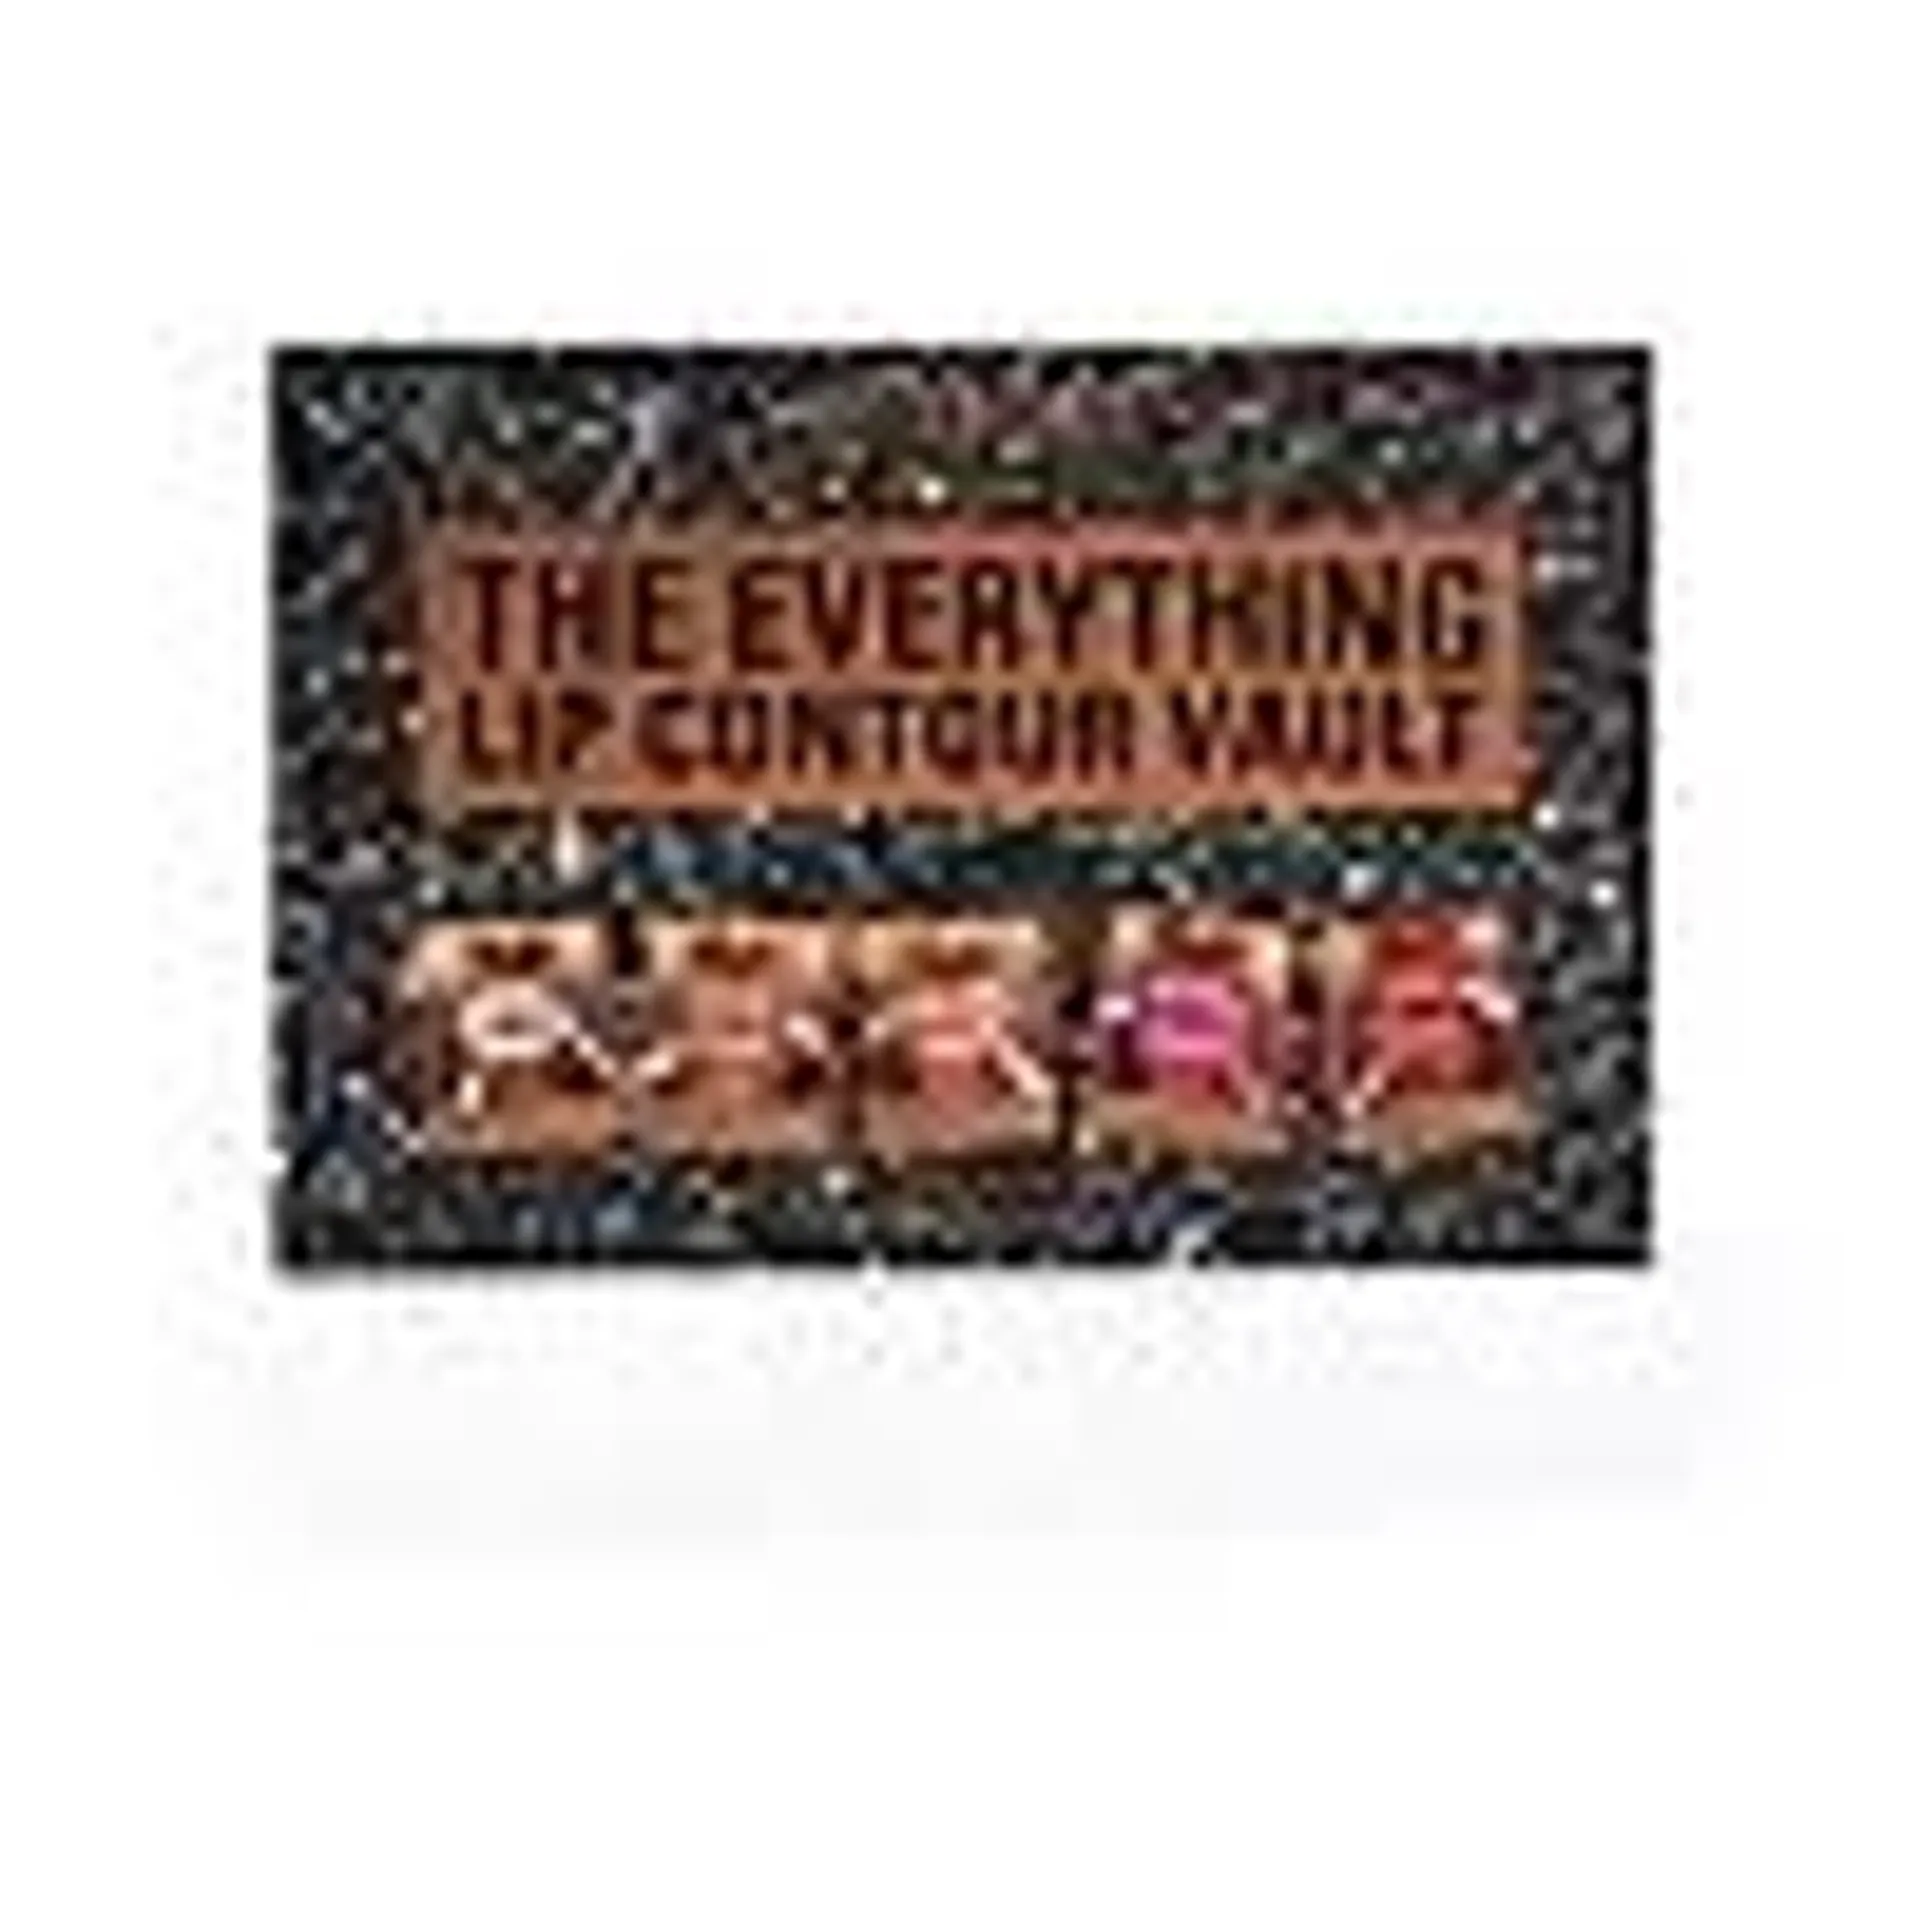 Revolution 'The Everything' Lip Contour Kit